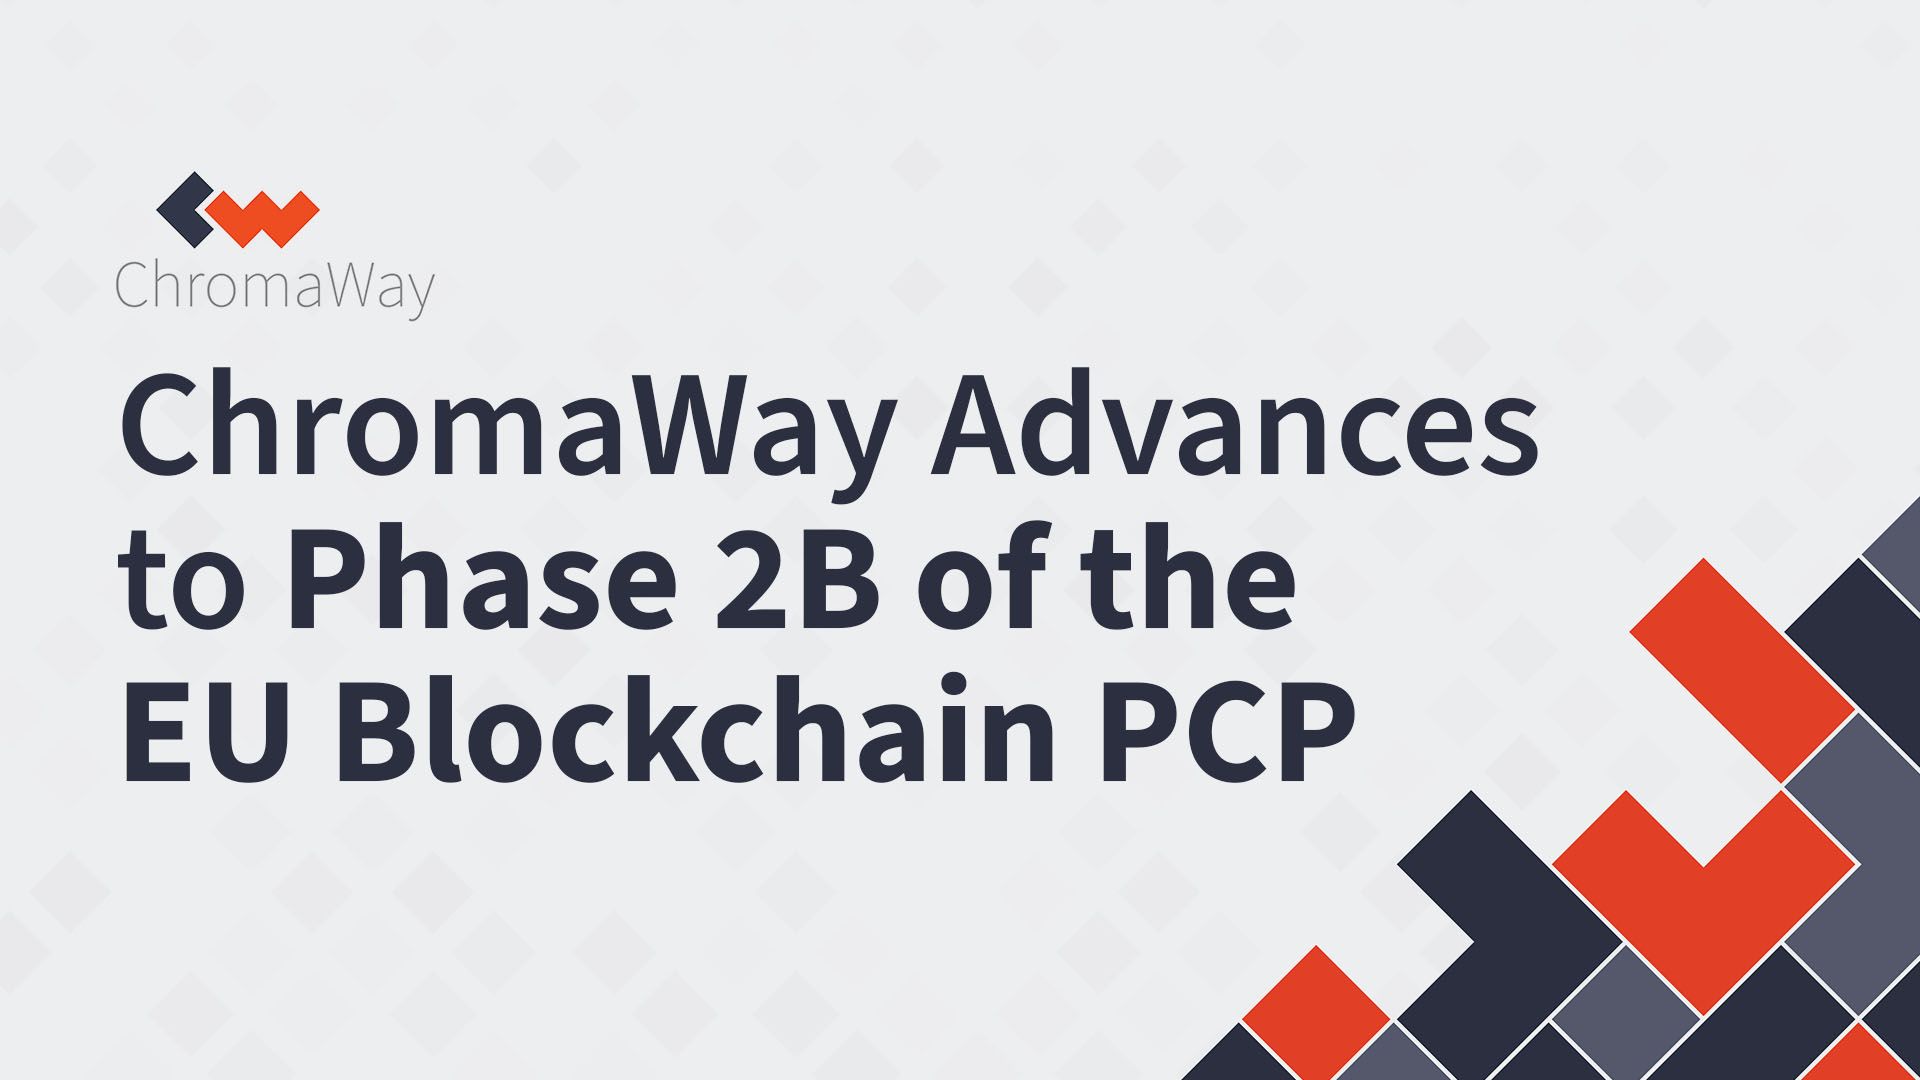 ChromaWay Advances to Phase 2B of the European Blockchain Pre-Commercial Procurement